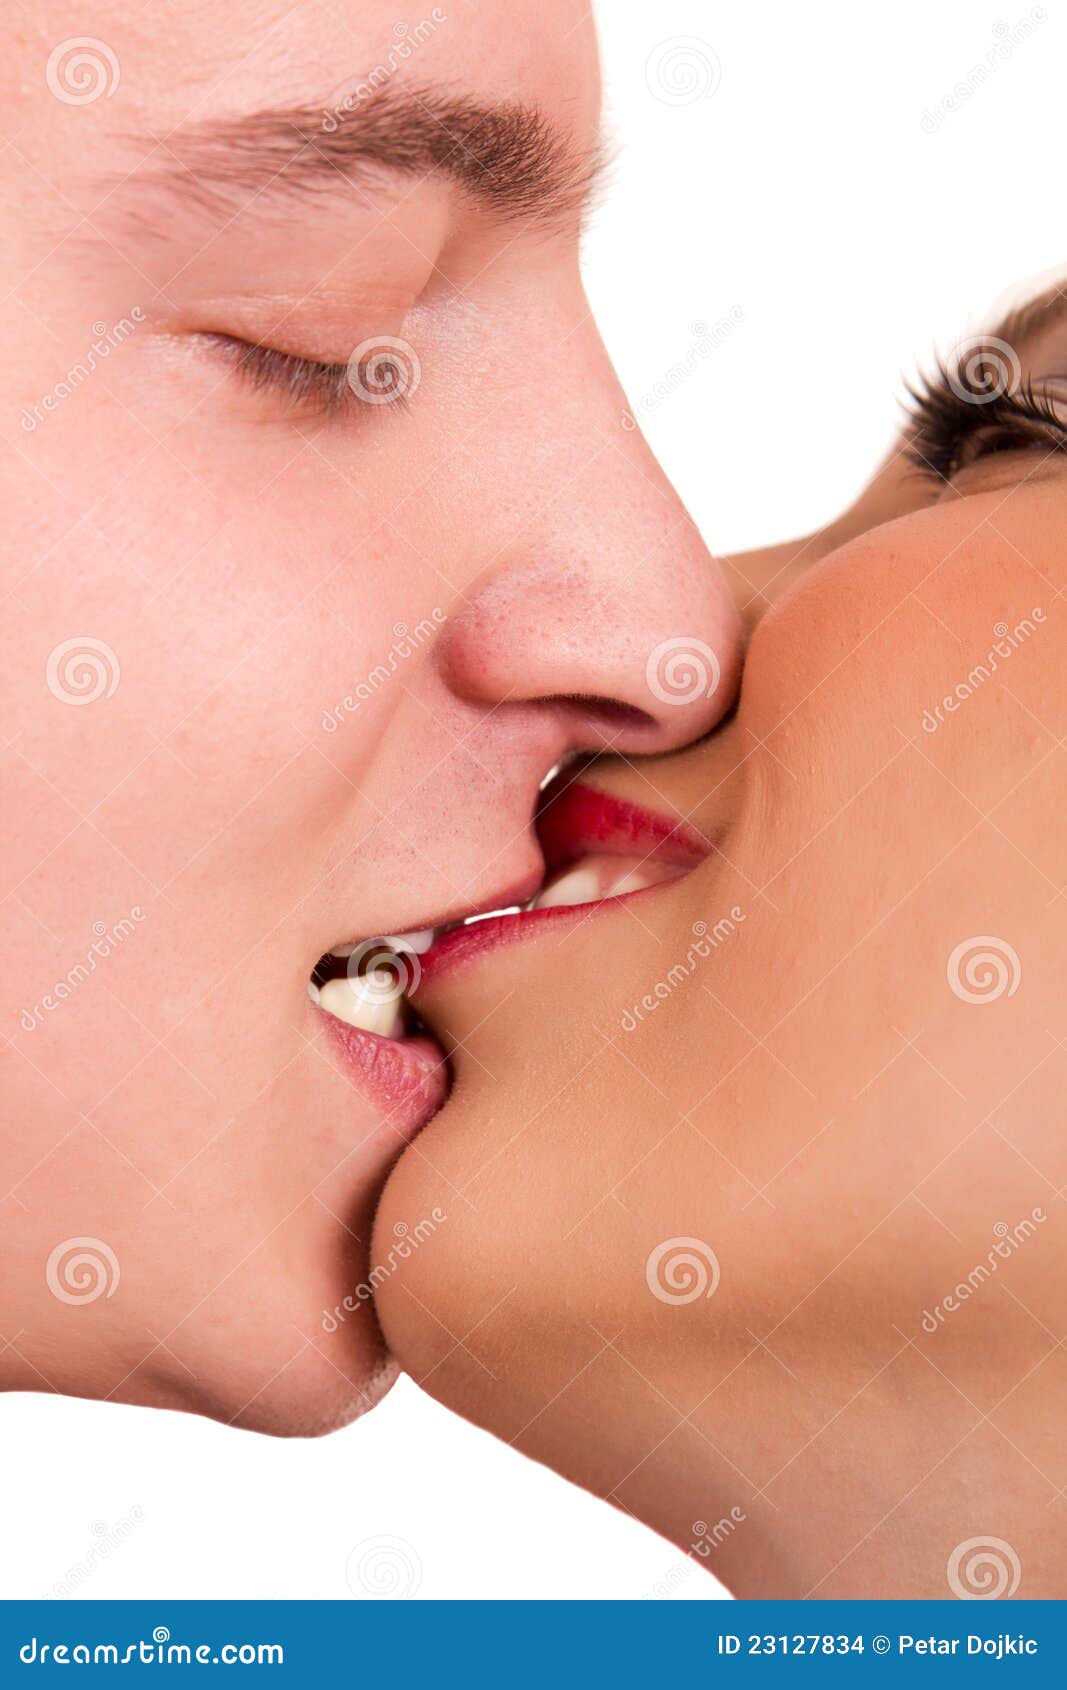 Romantic kiss stock photo. Image of cheerful, beauty - 23127834